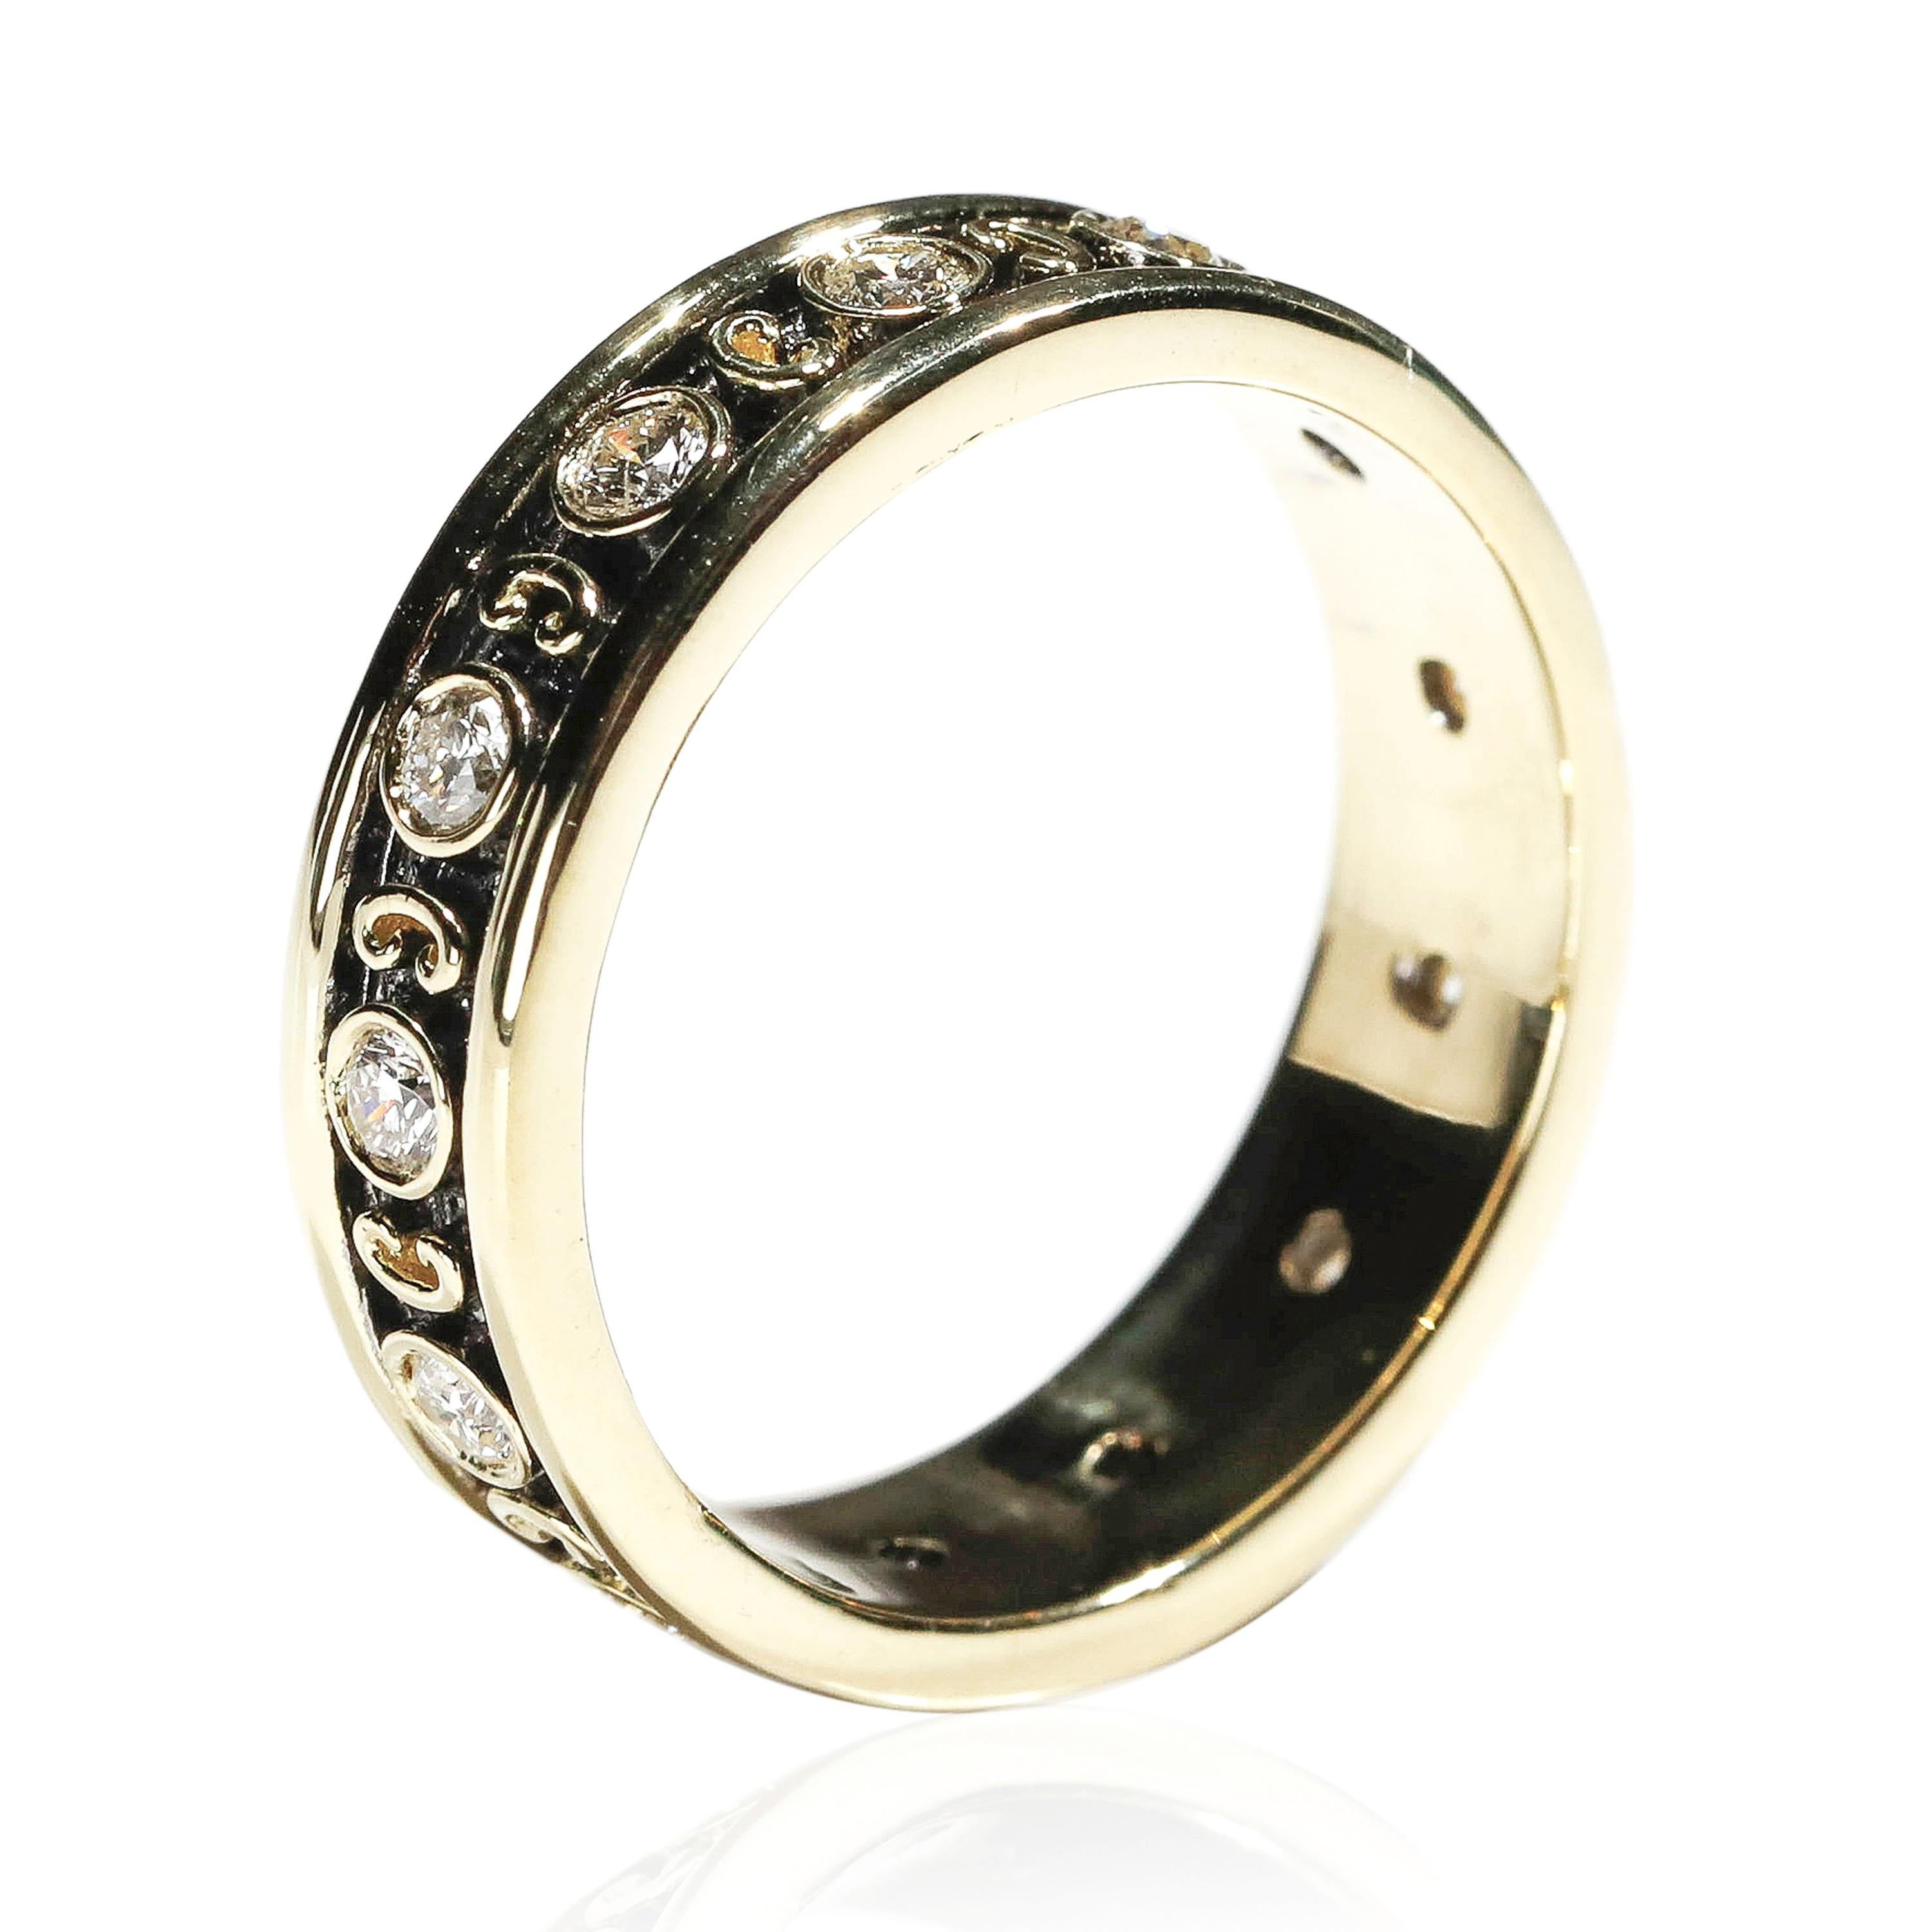 Contemporary 18 Karat Yellow Gold 0.80 Carat Round Cut Diamond Full Band Ring US Size 6